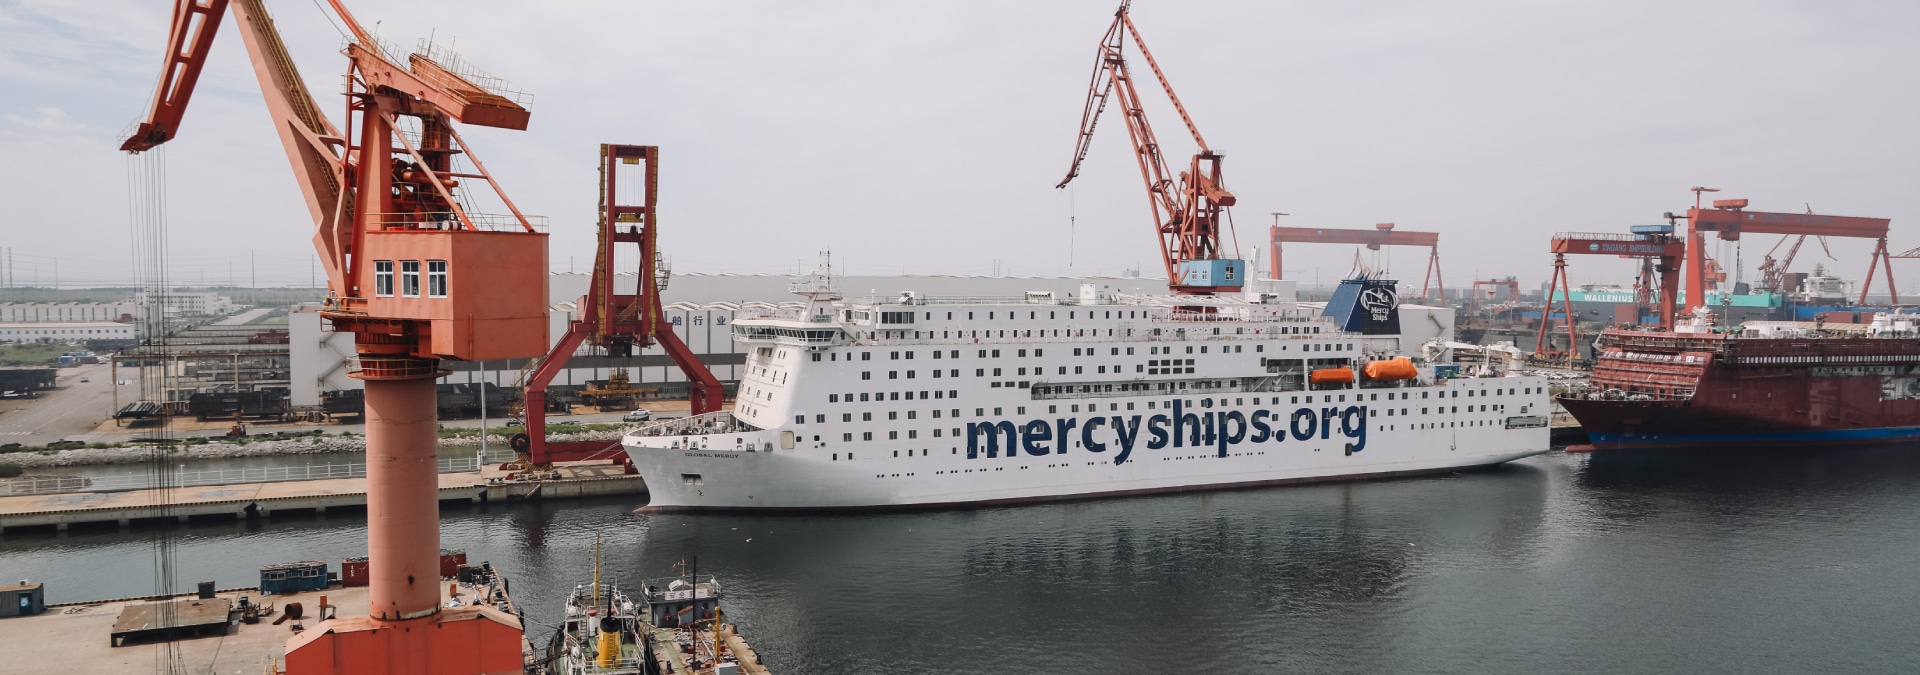 Construction global mercy chantier naval